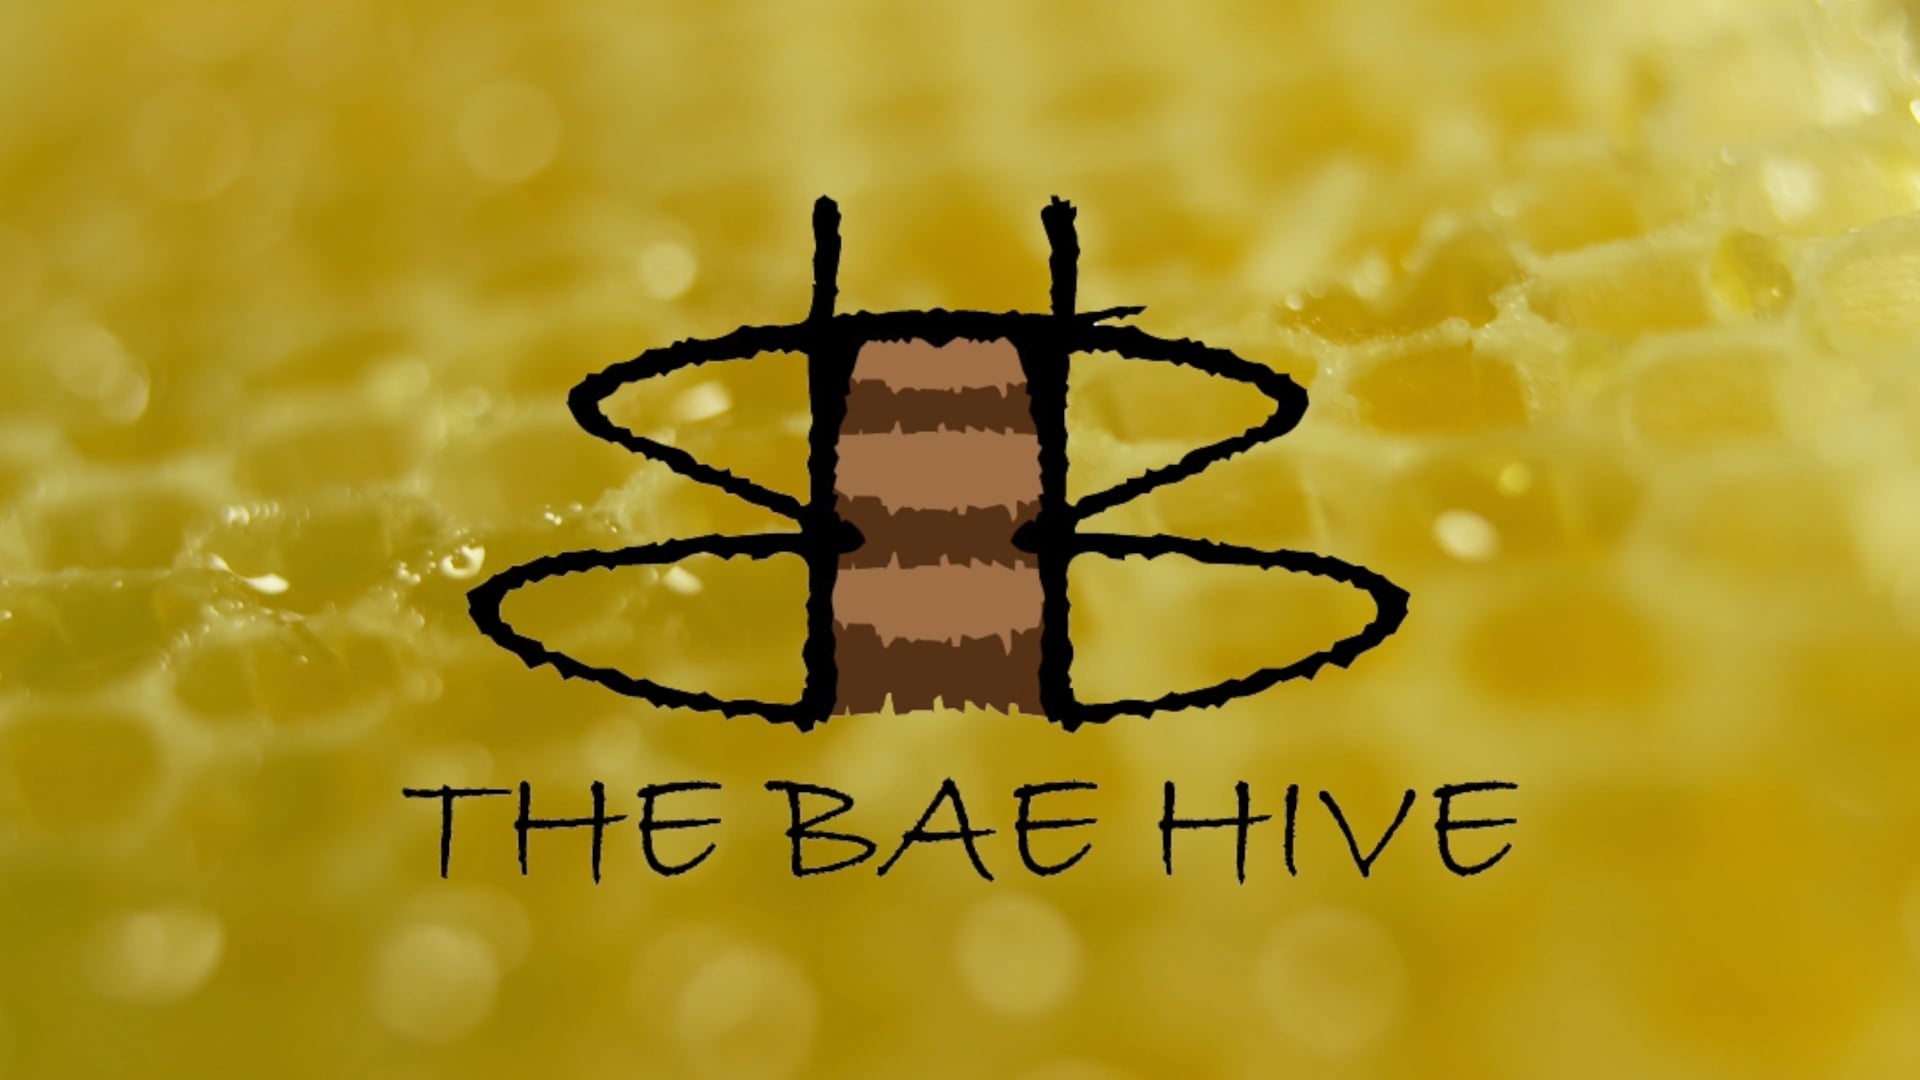 The Bae Hive